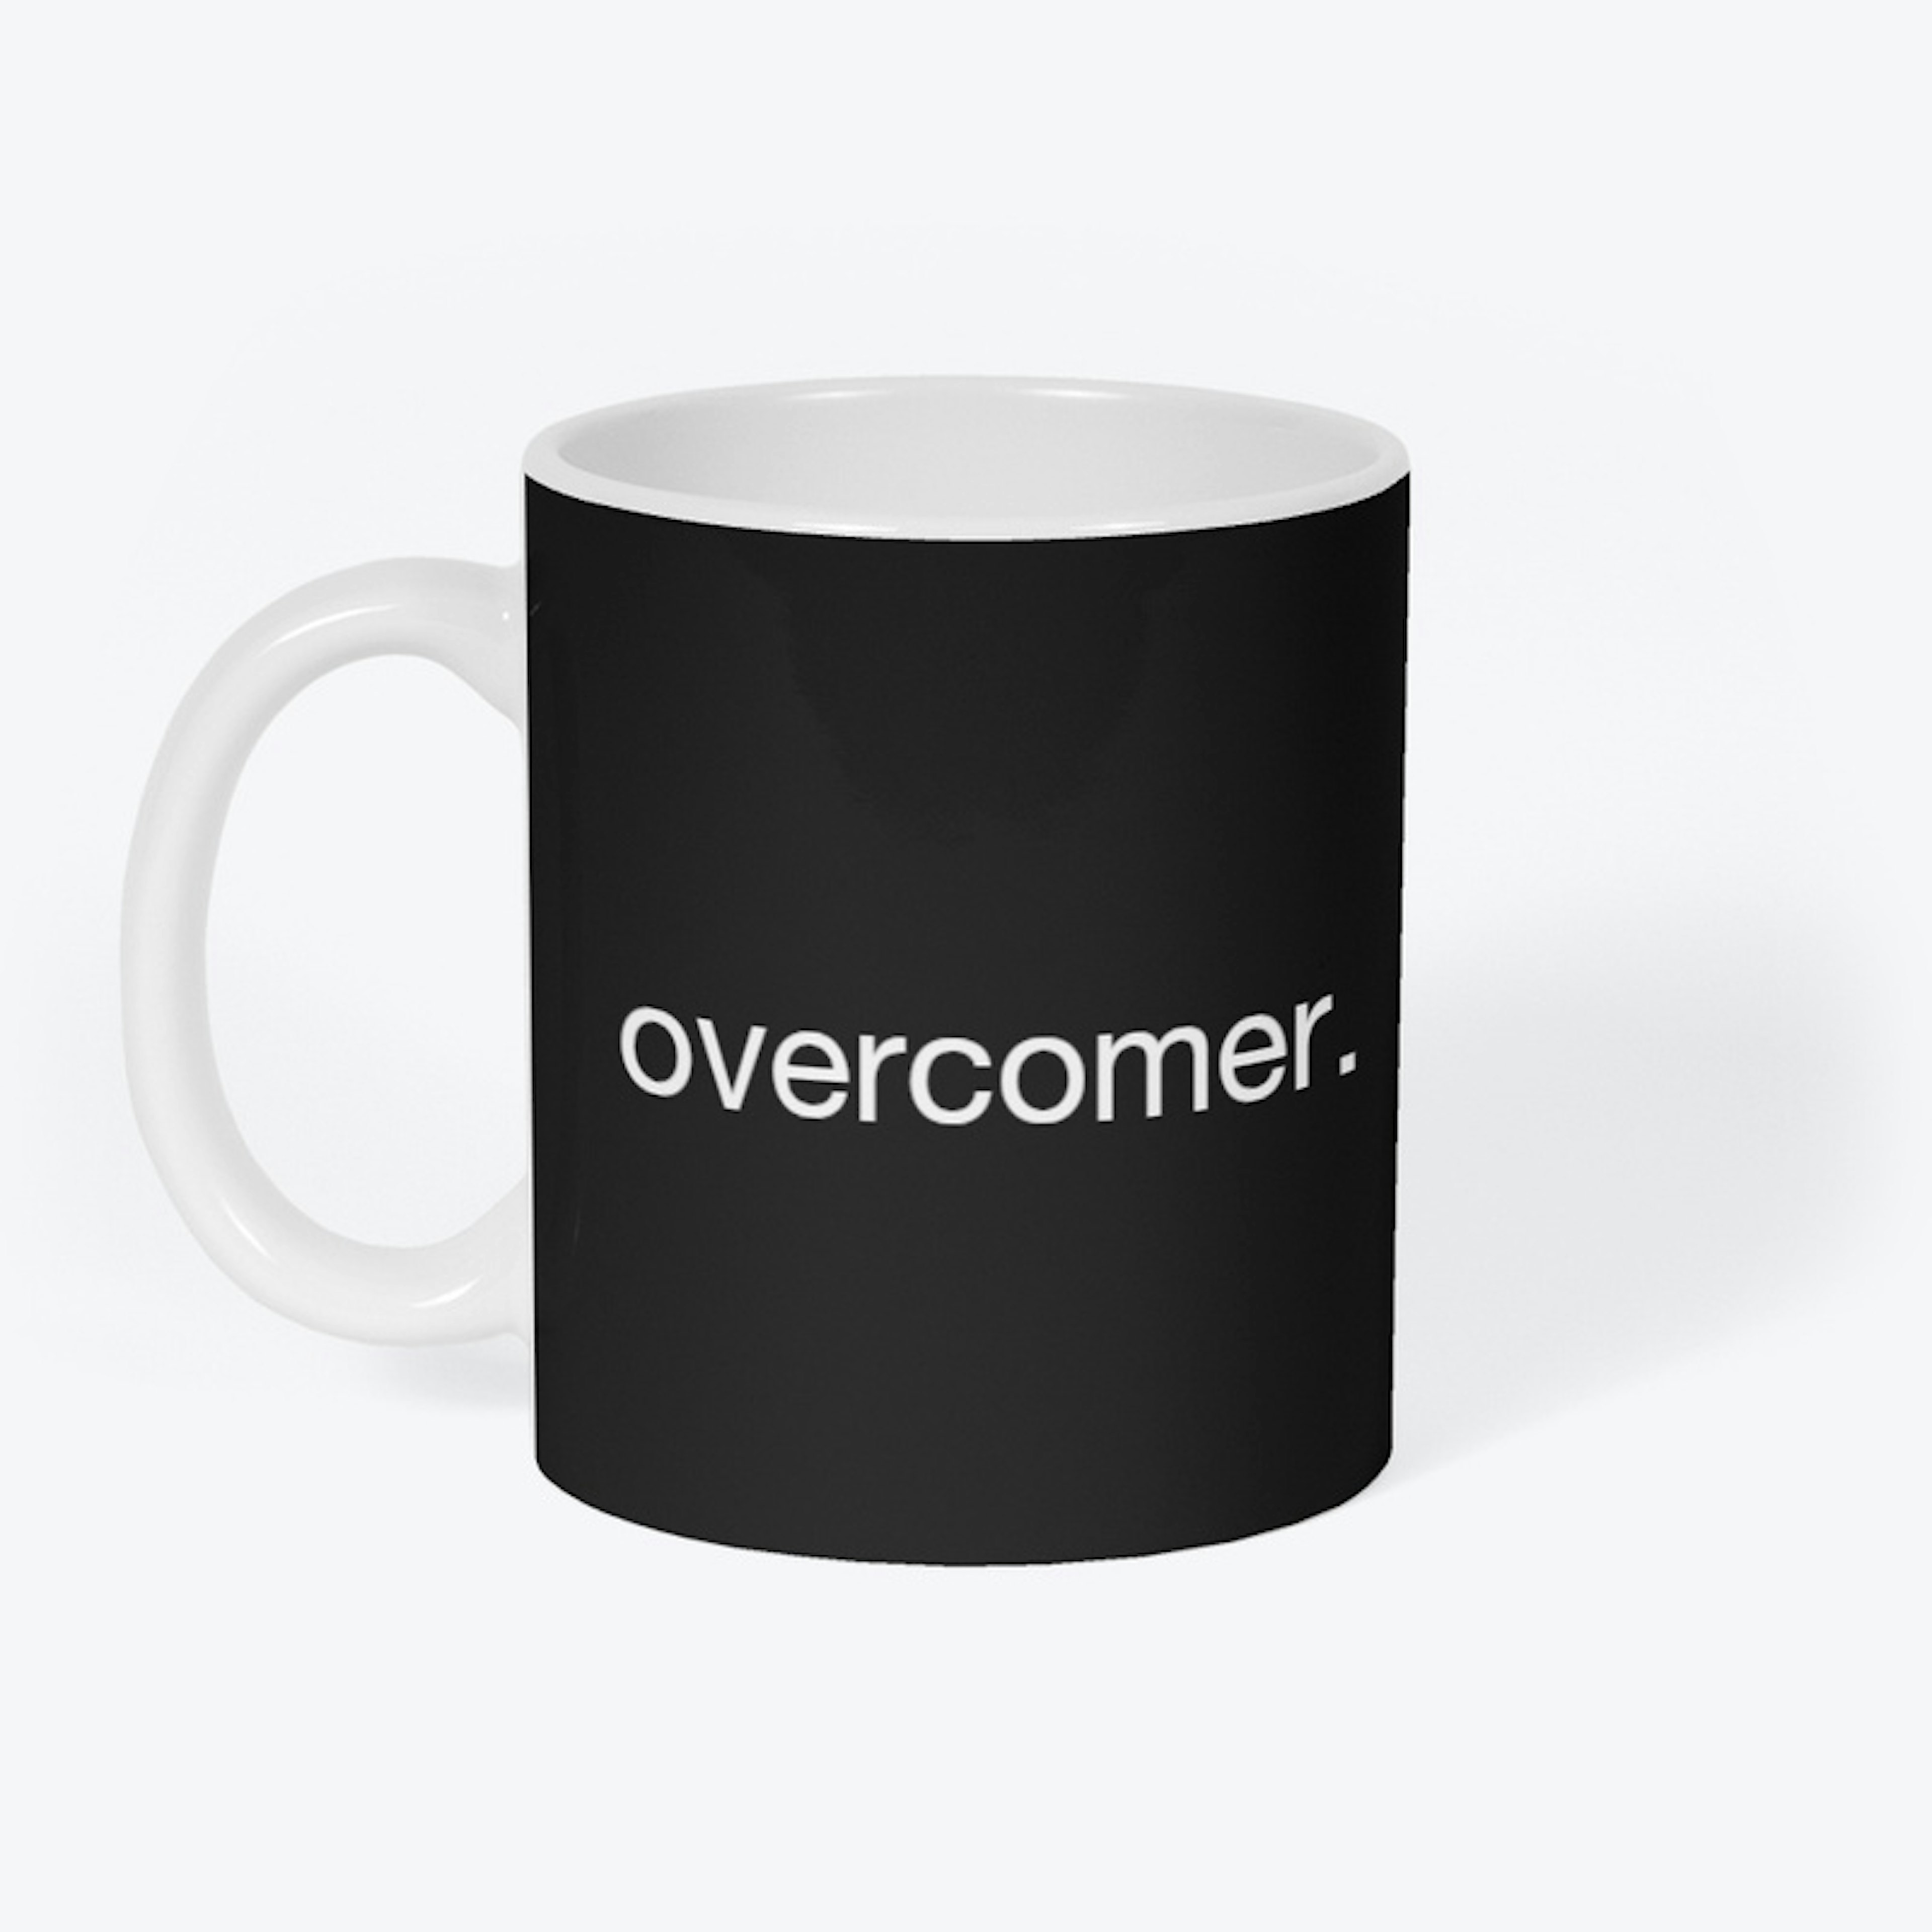 Overcomer 